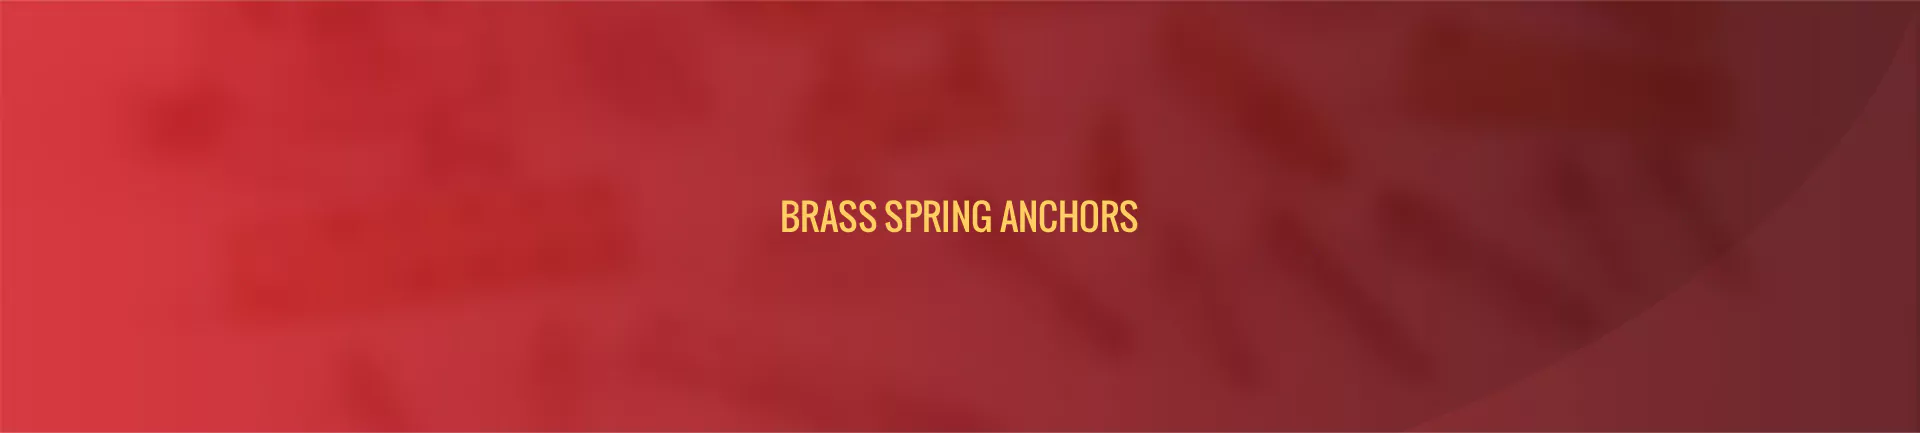 brass-spring-anchors-banner